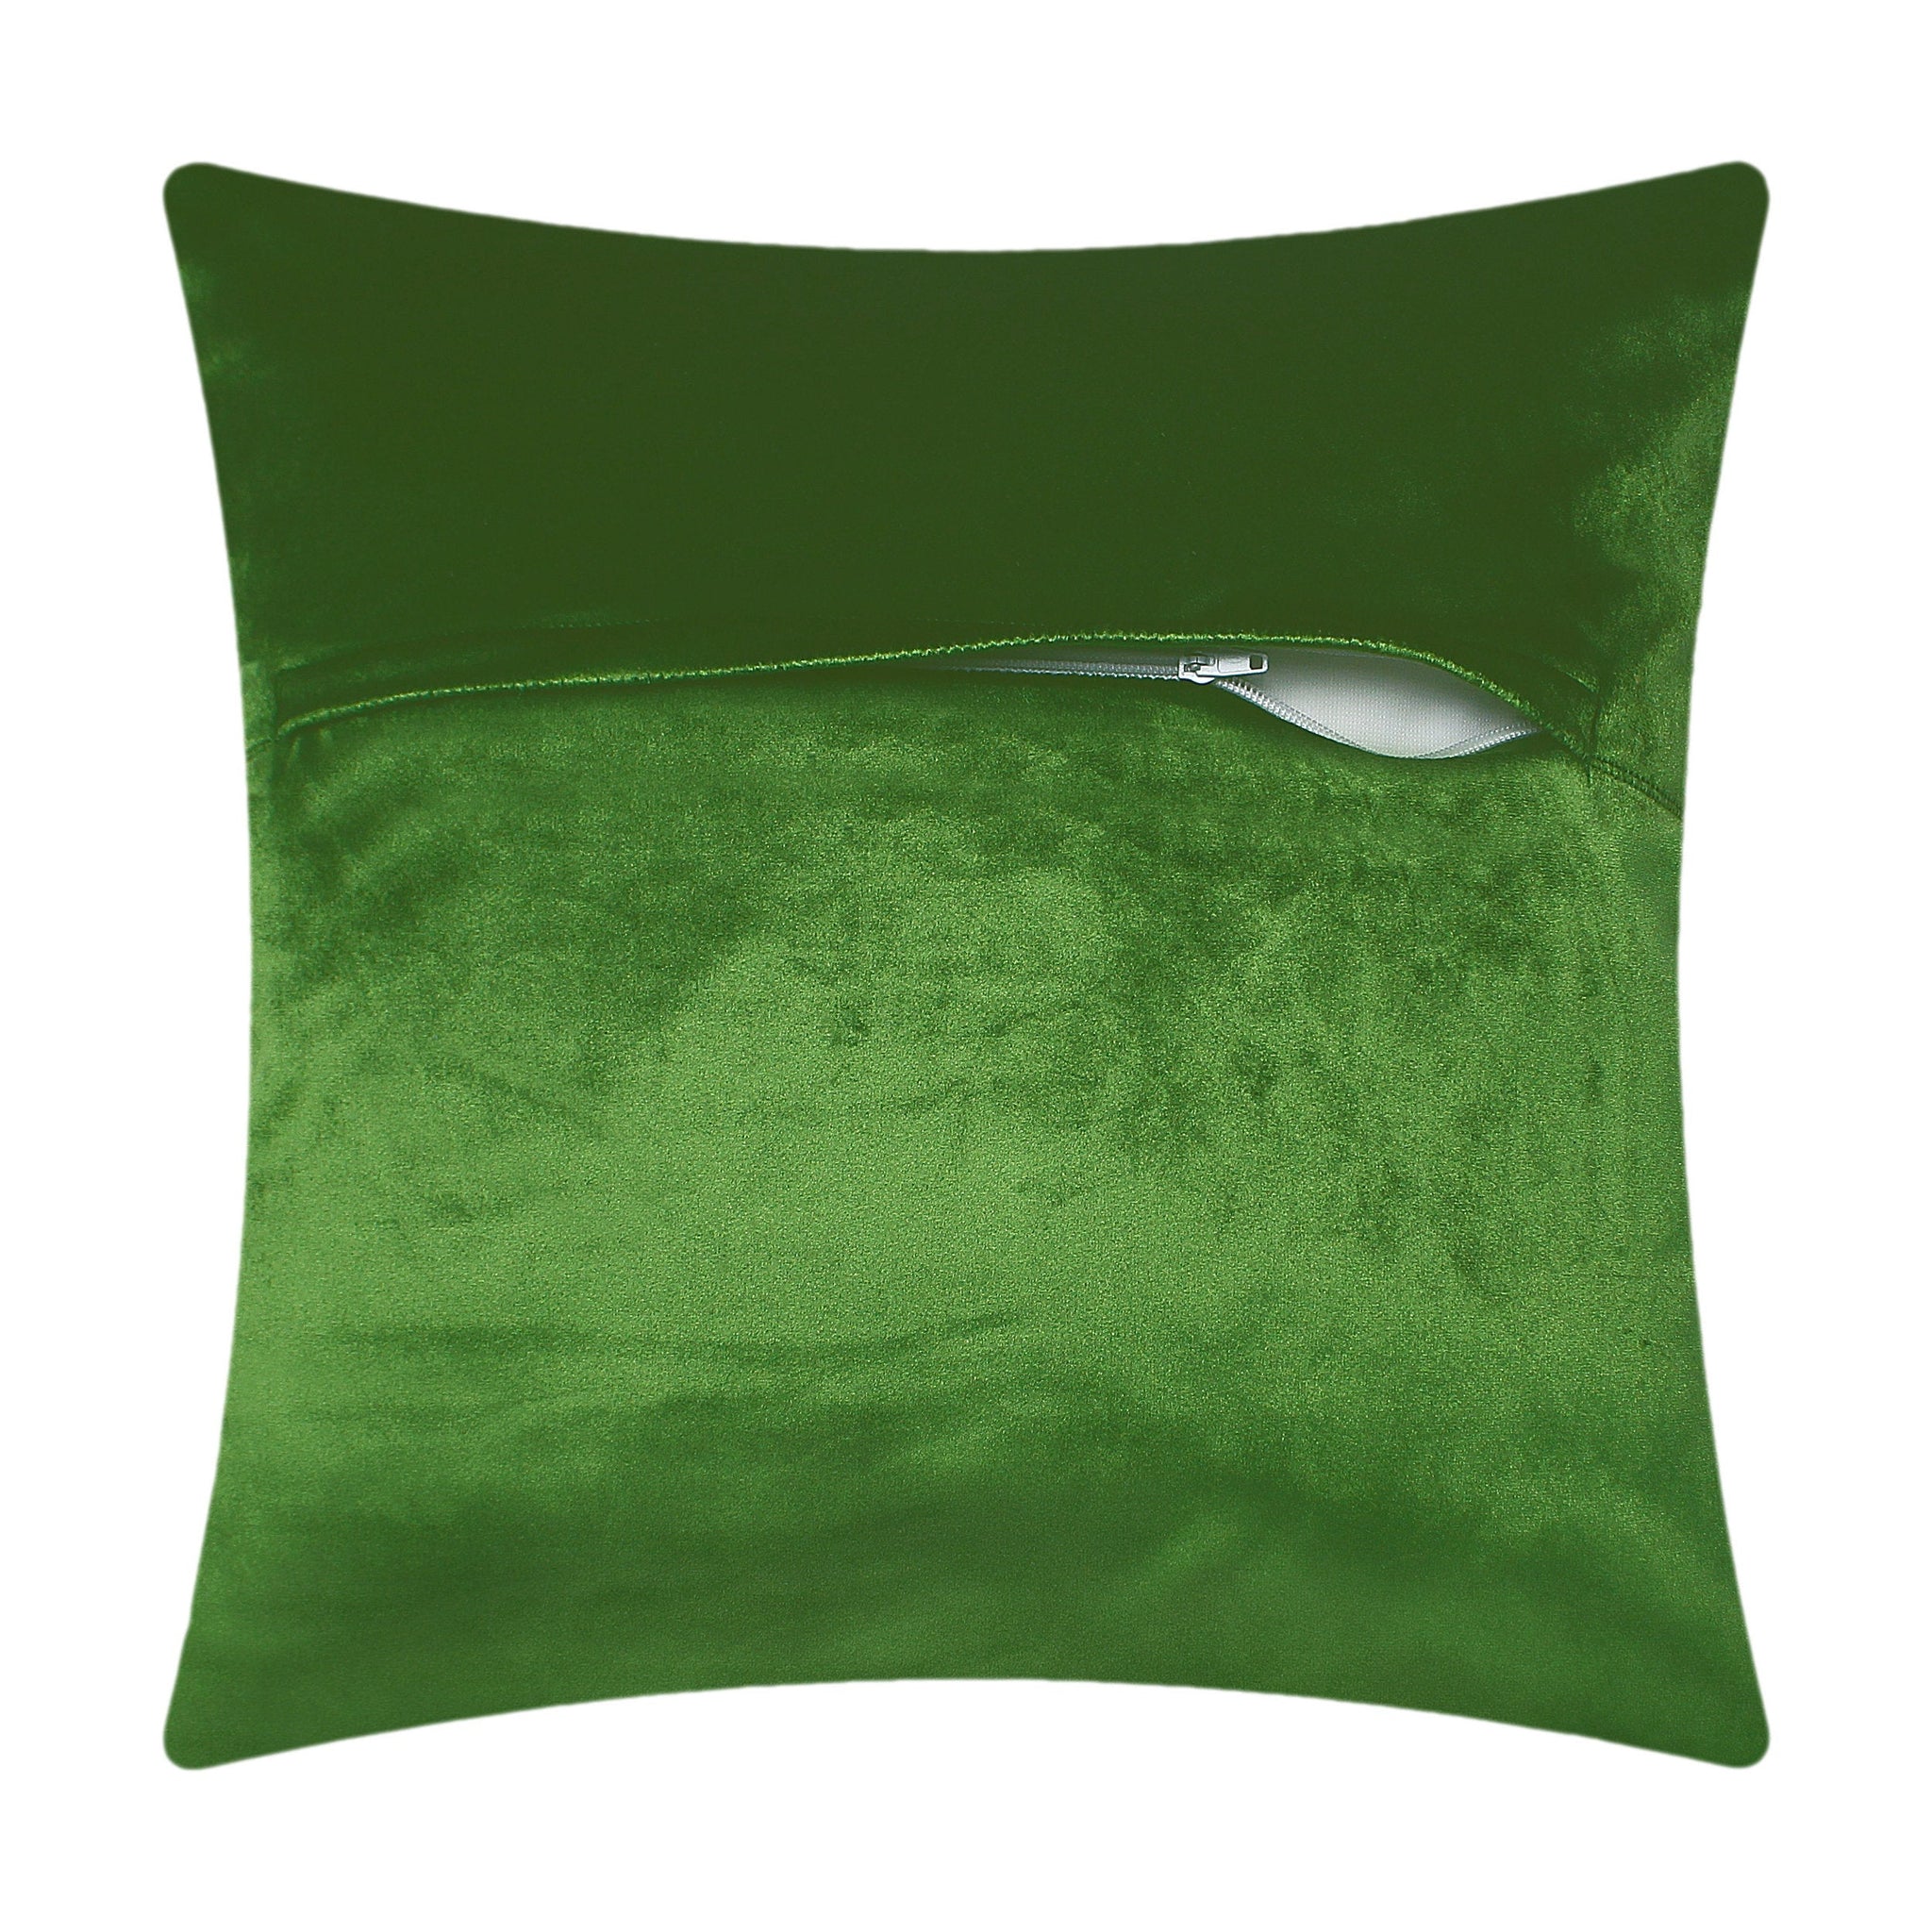 Green Velvet Cushion Cover Zigzag Wave Geometric Decorative Pillowcase Modern Home Decor Throw Pillow for Sofa Chair Living Room 45x45 cm 18x18 In